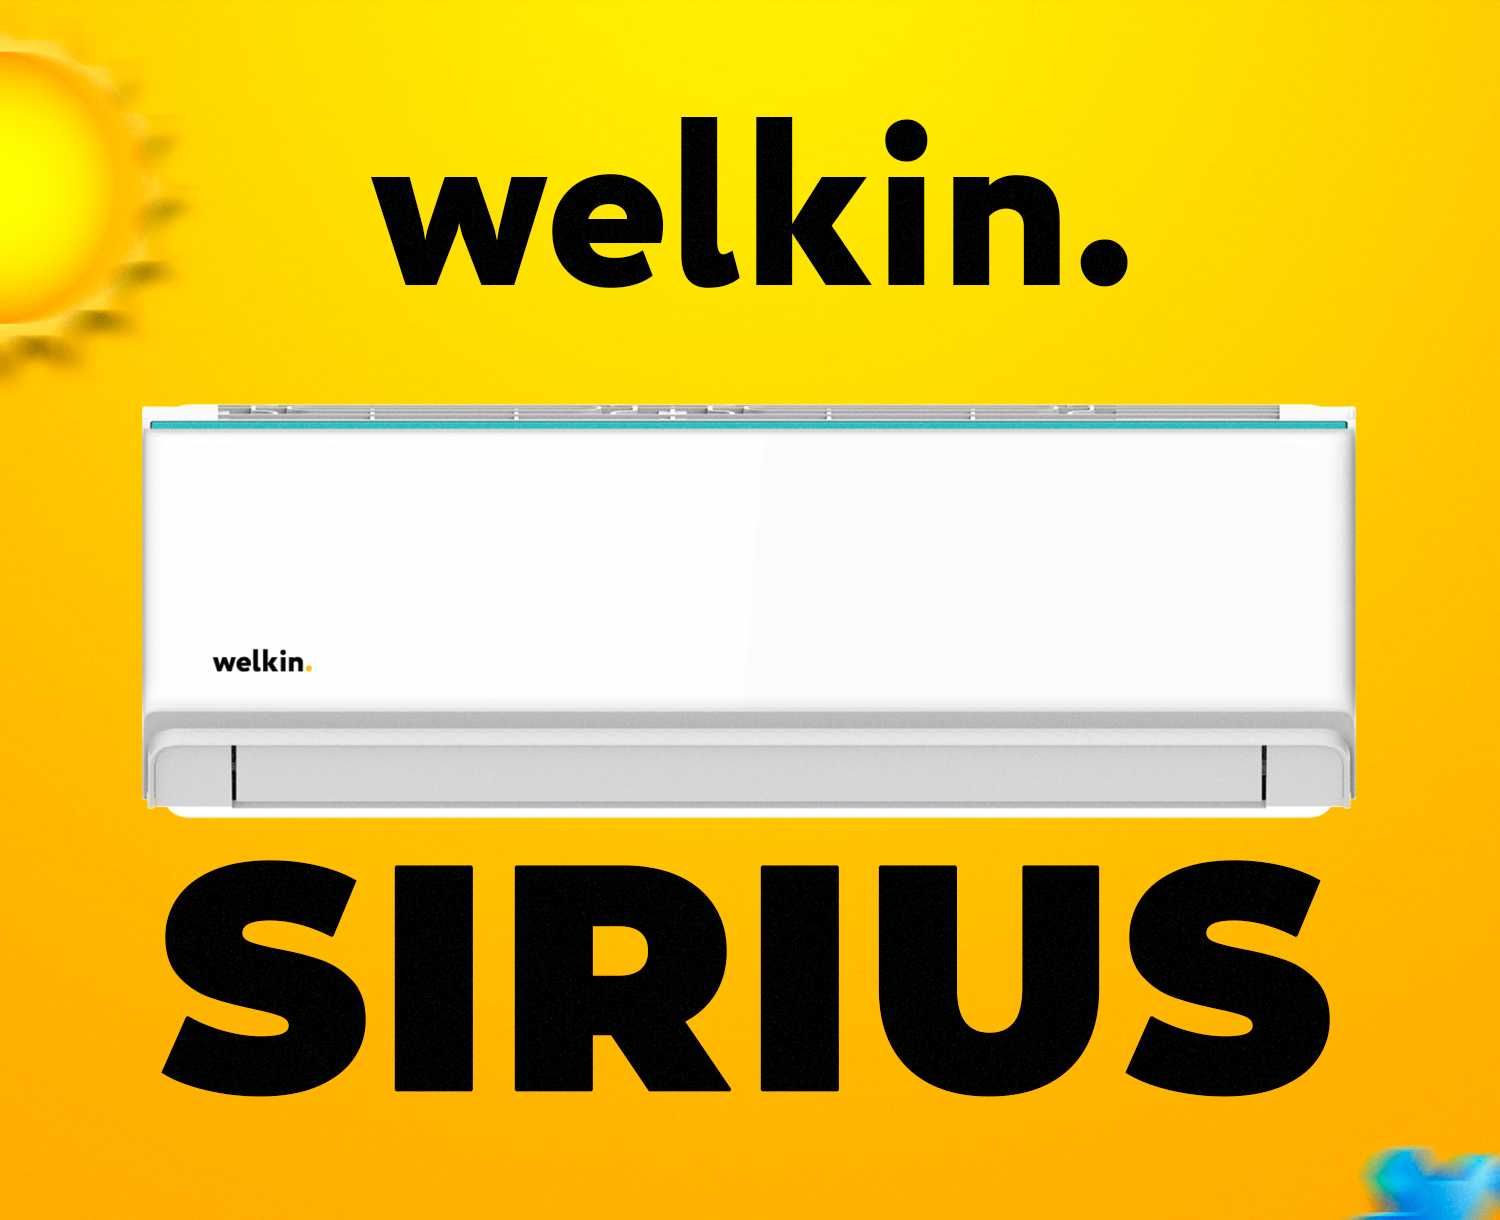 Кондиционер welkin Sirius 7/9/12/18/24 BTU Full DC Inverter!